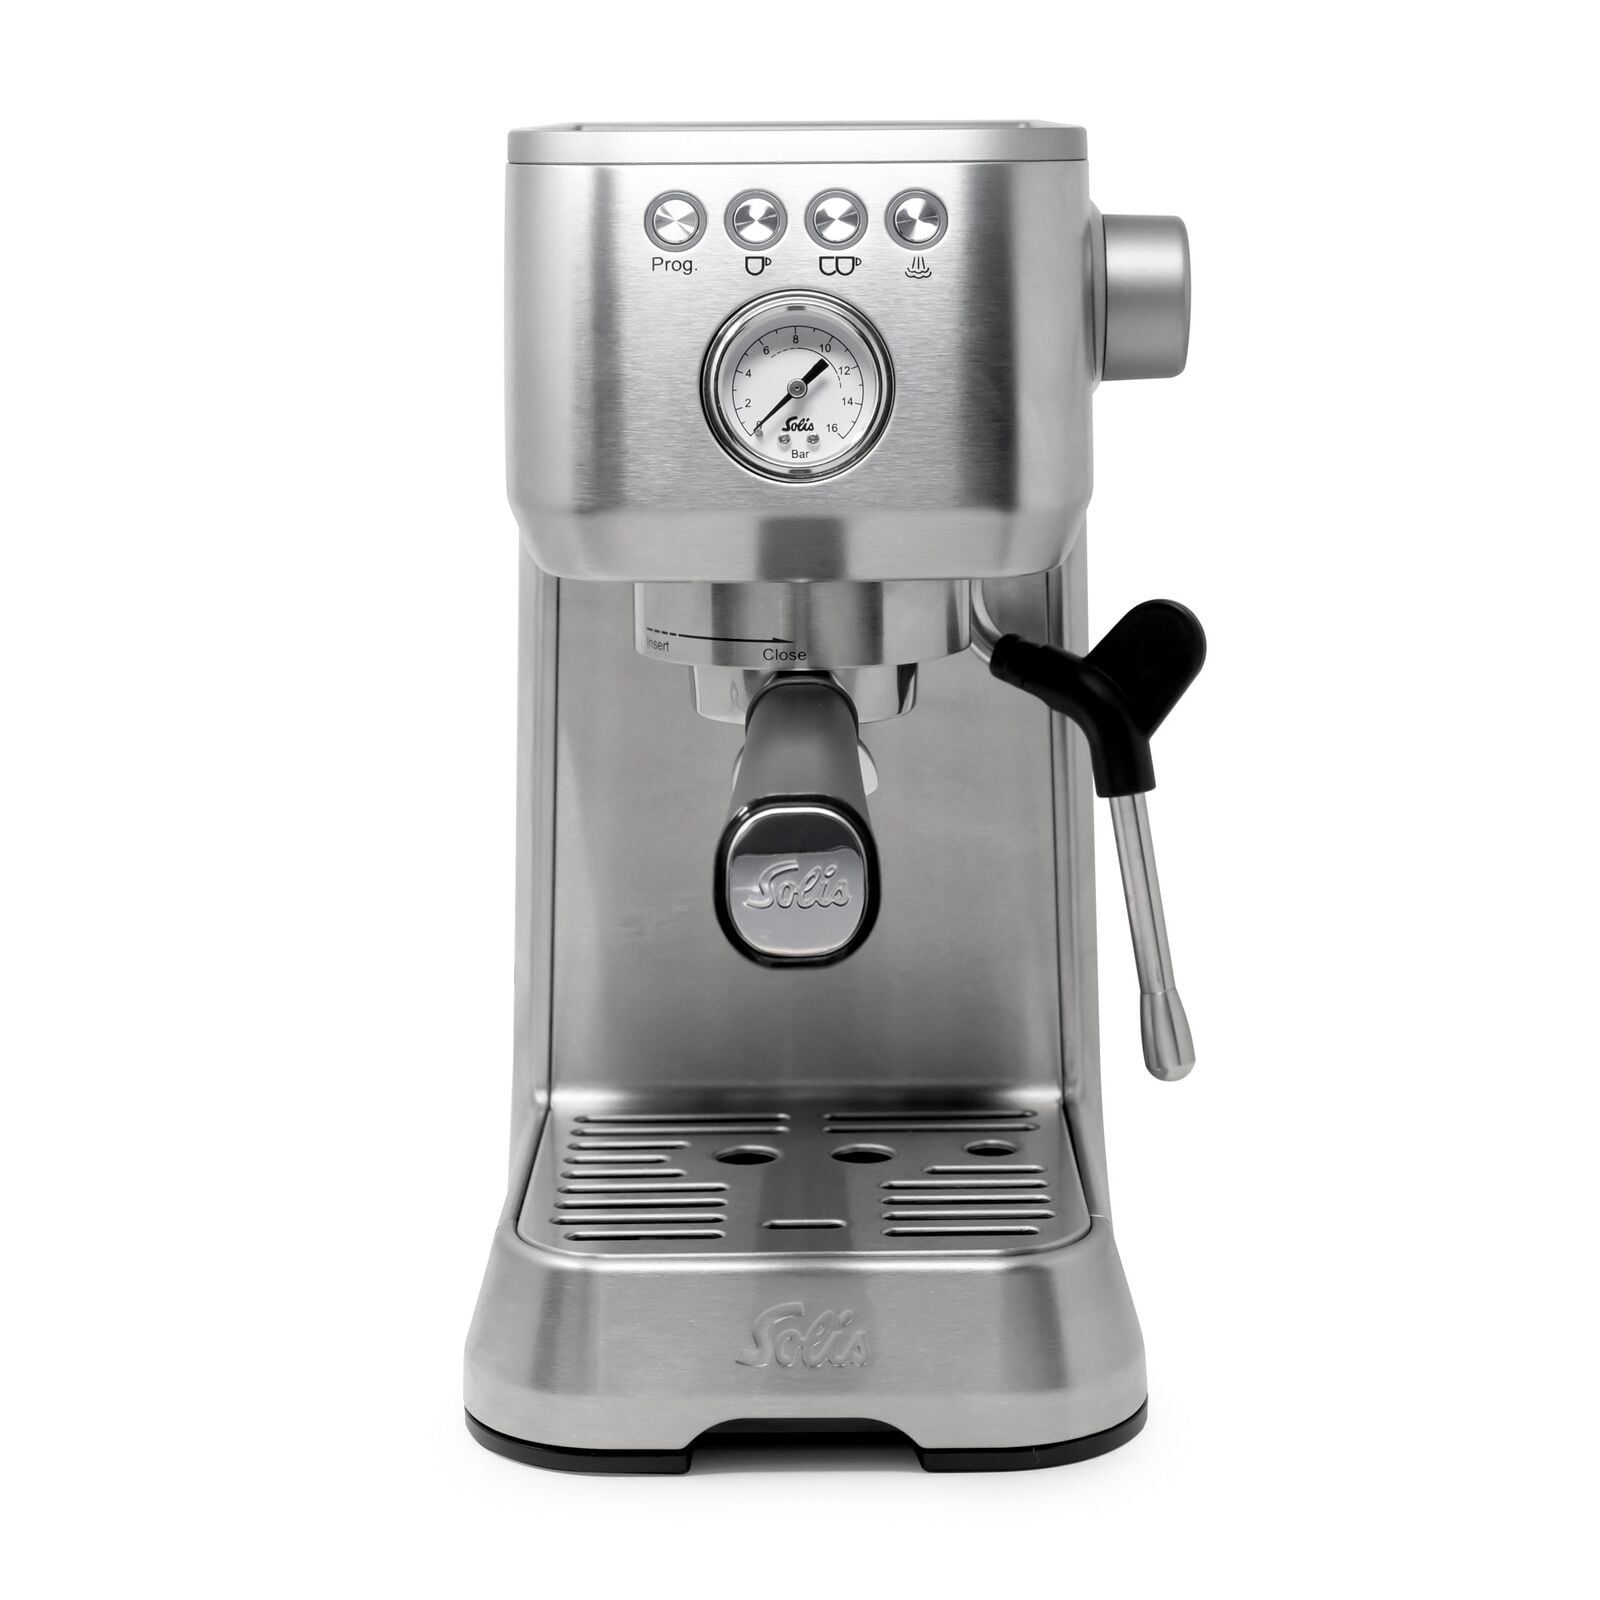 New Solis Perfetta Plus Espresso Machine, Stainless Steel - Walmart.com